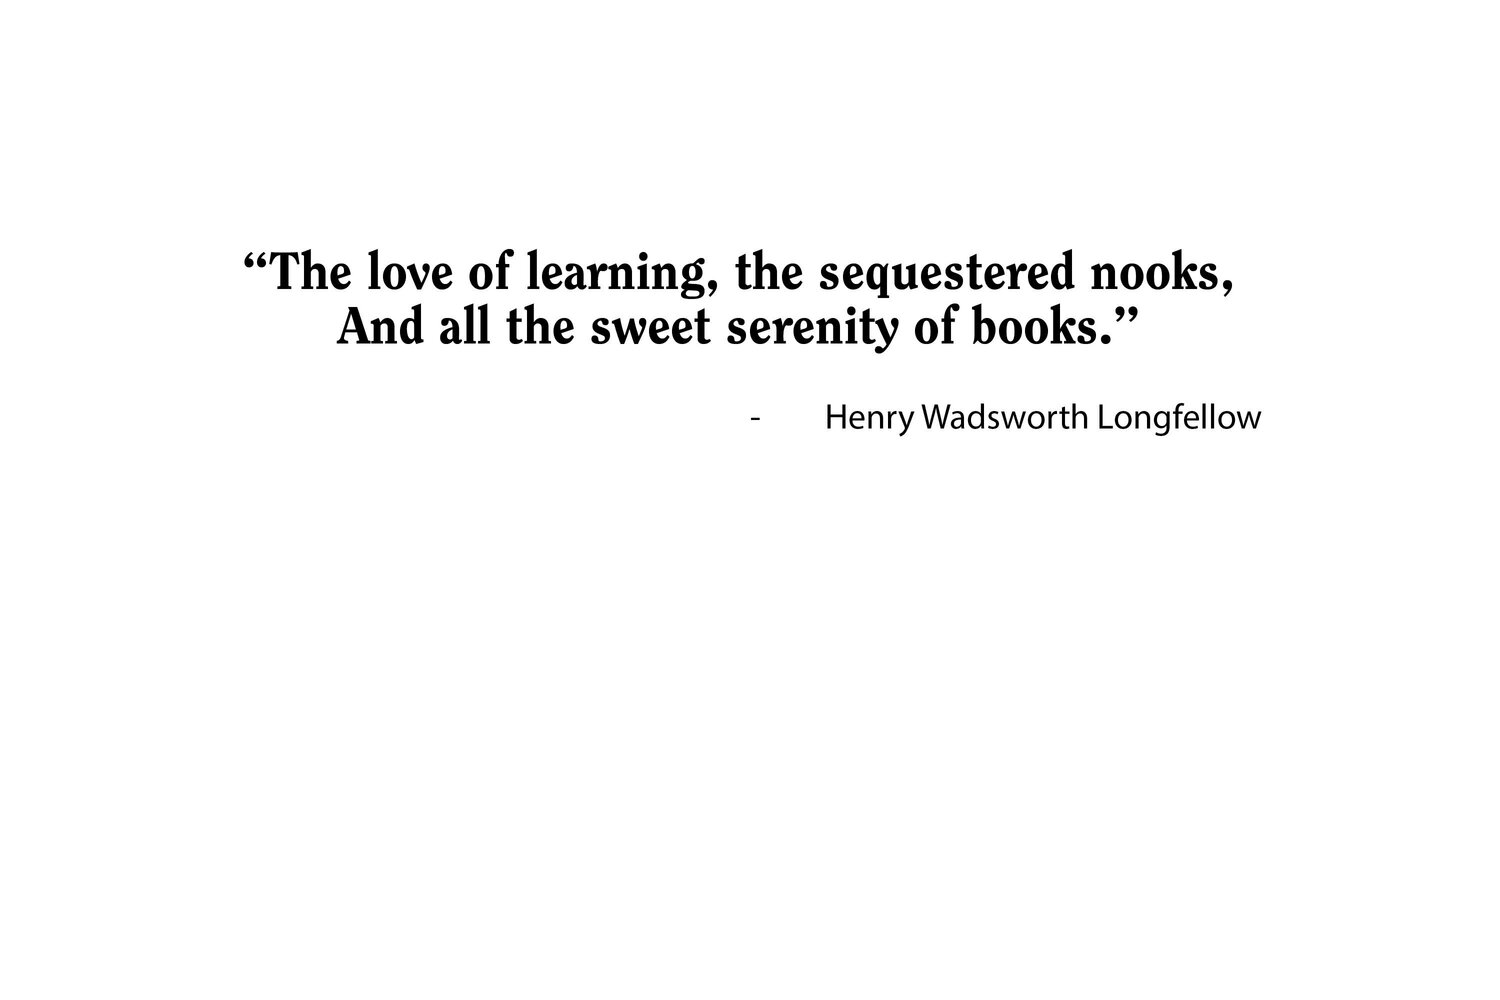 Henry Wadsworth Longfellow Quote